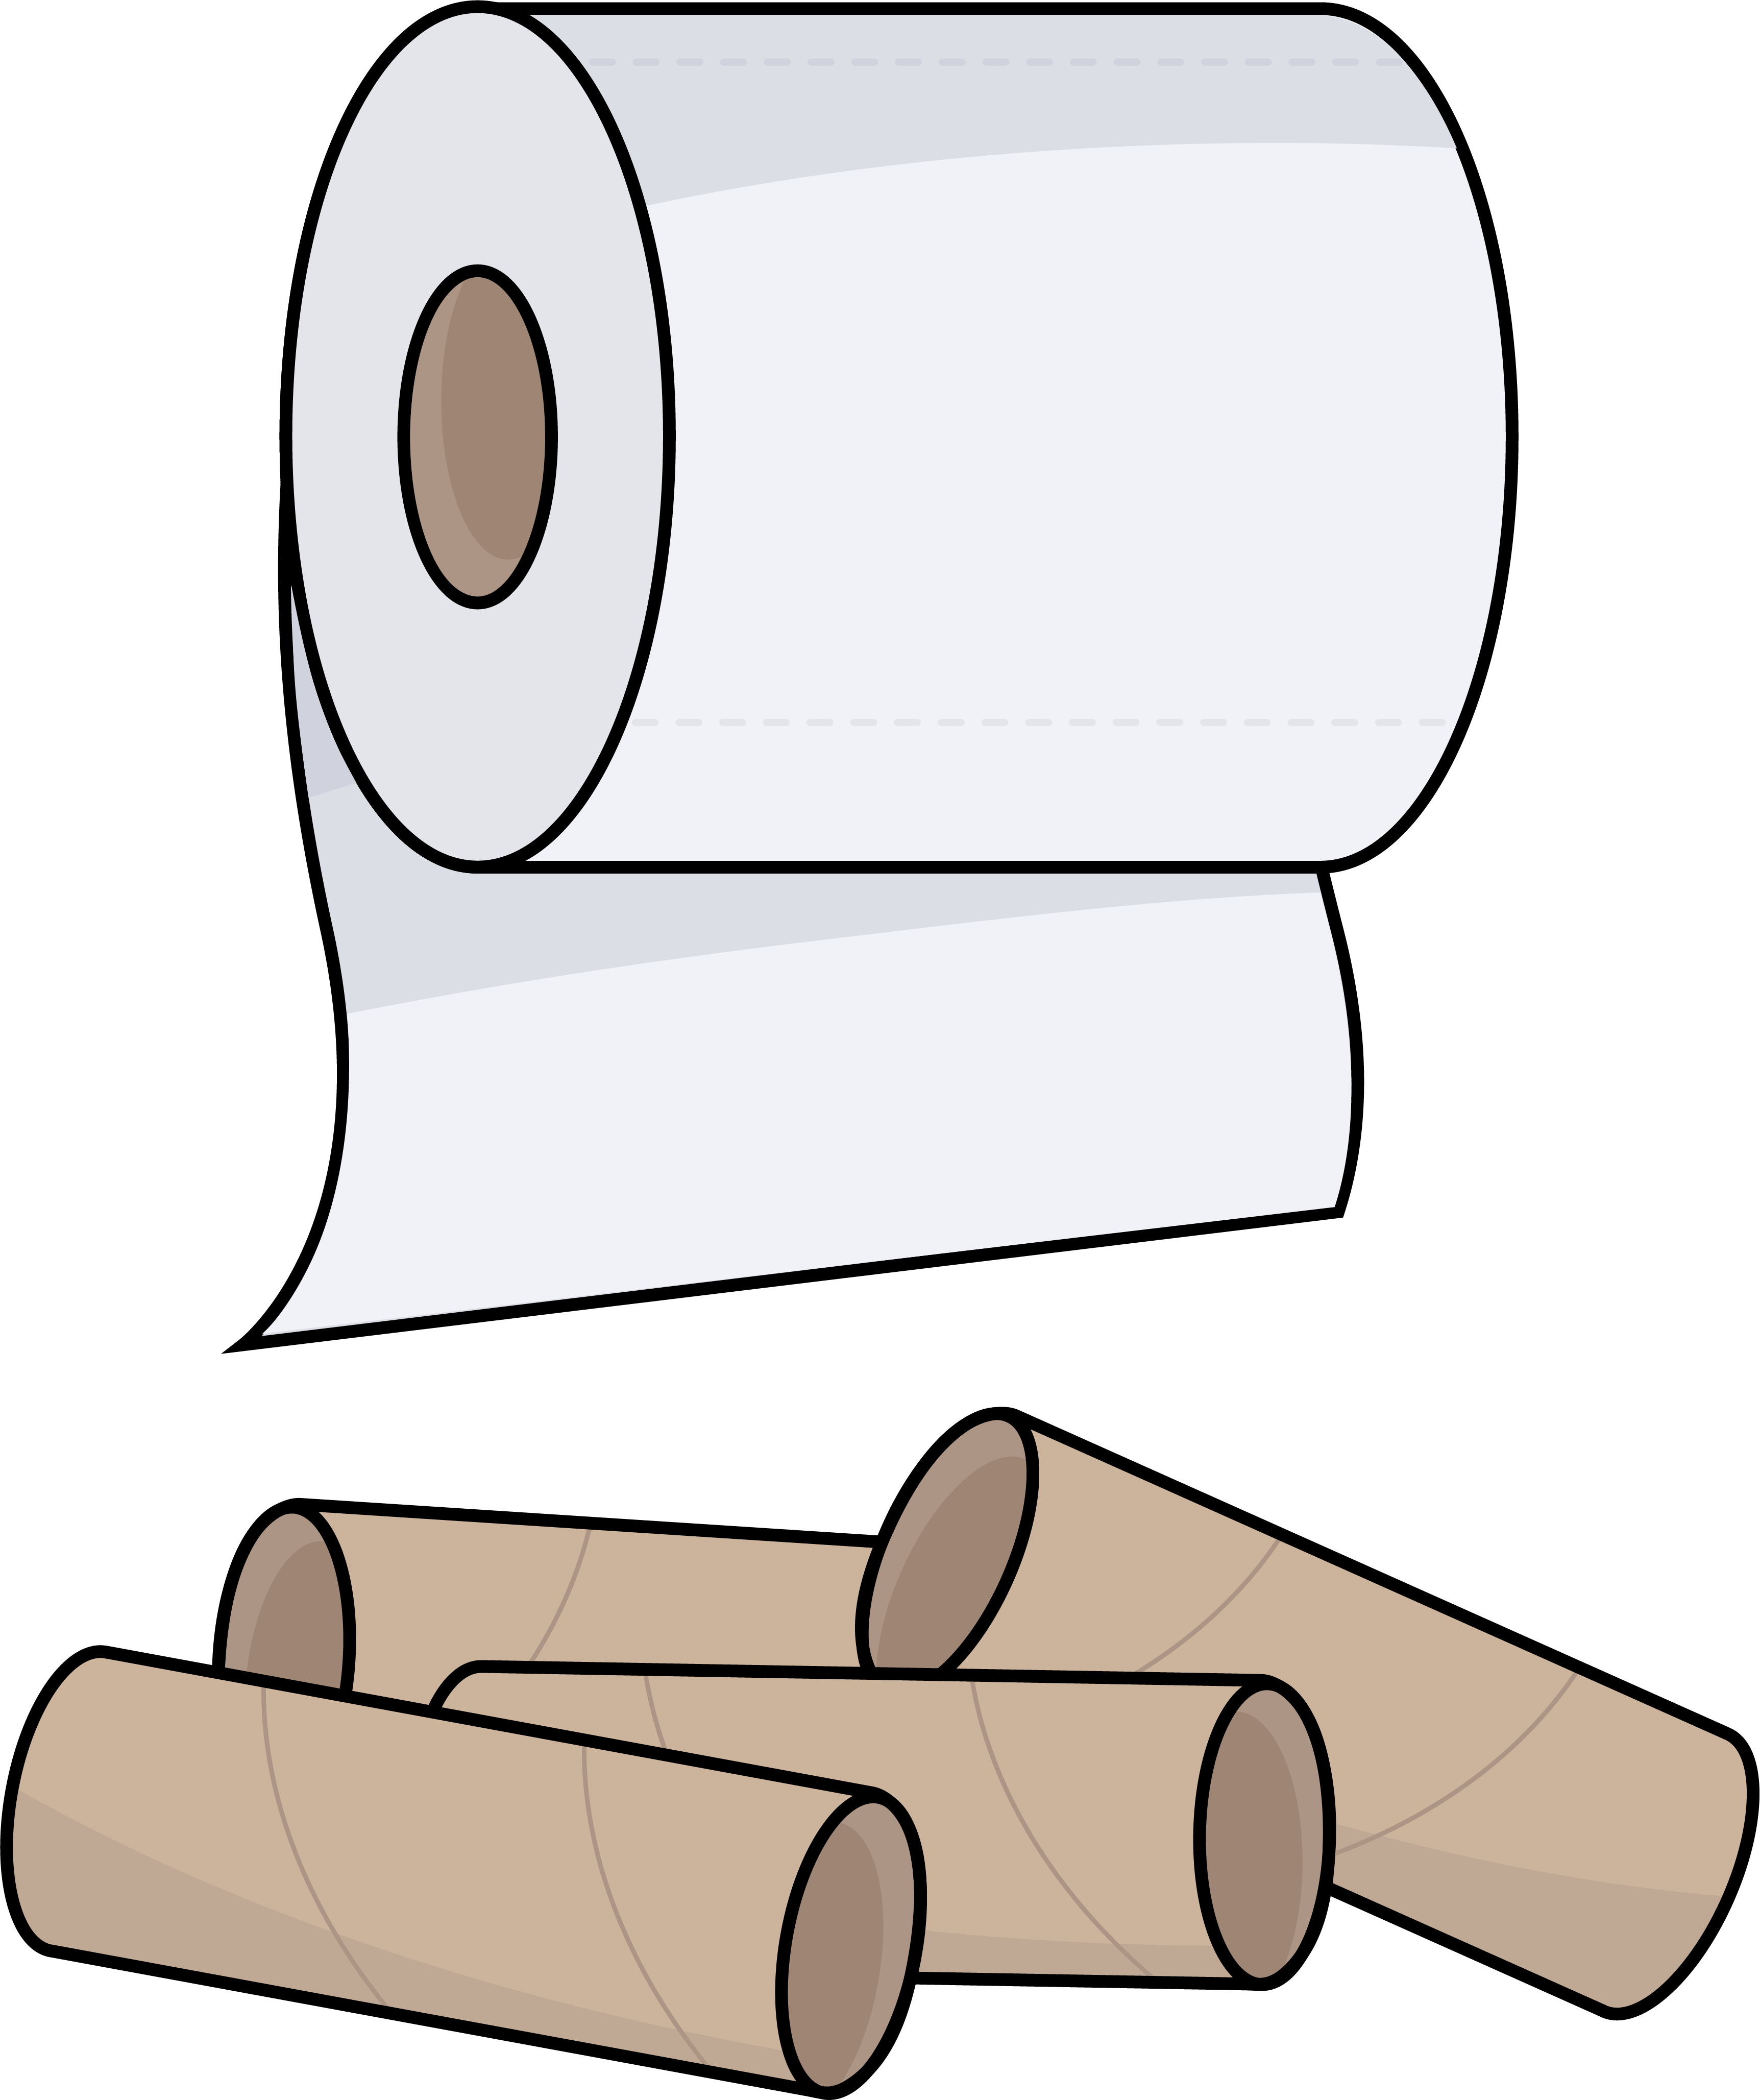 Cardboard Toilet Roll Tubes